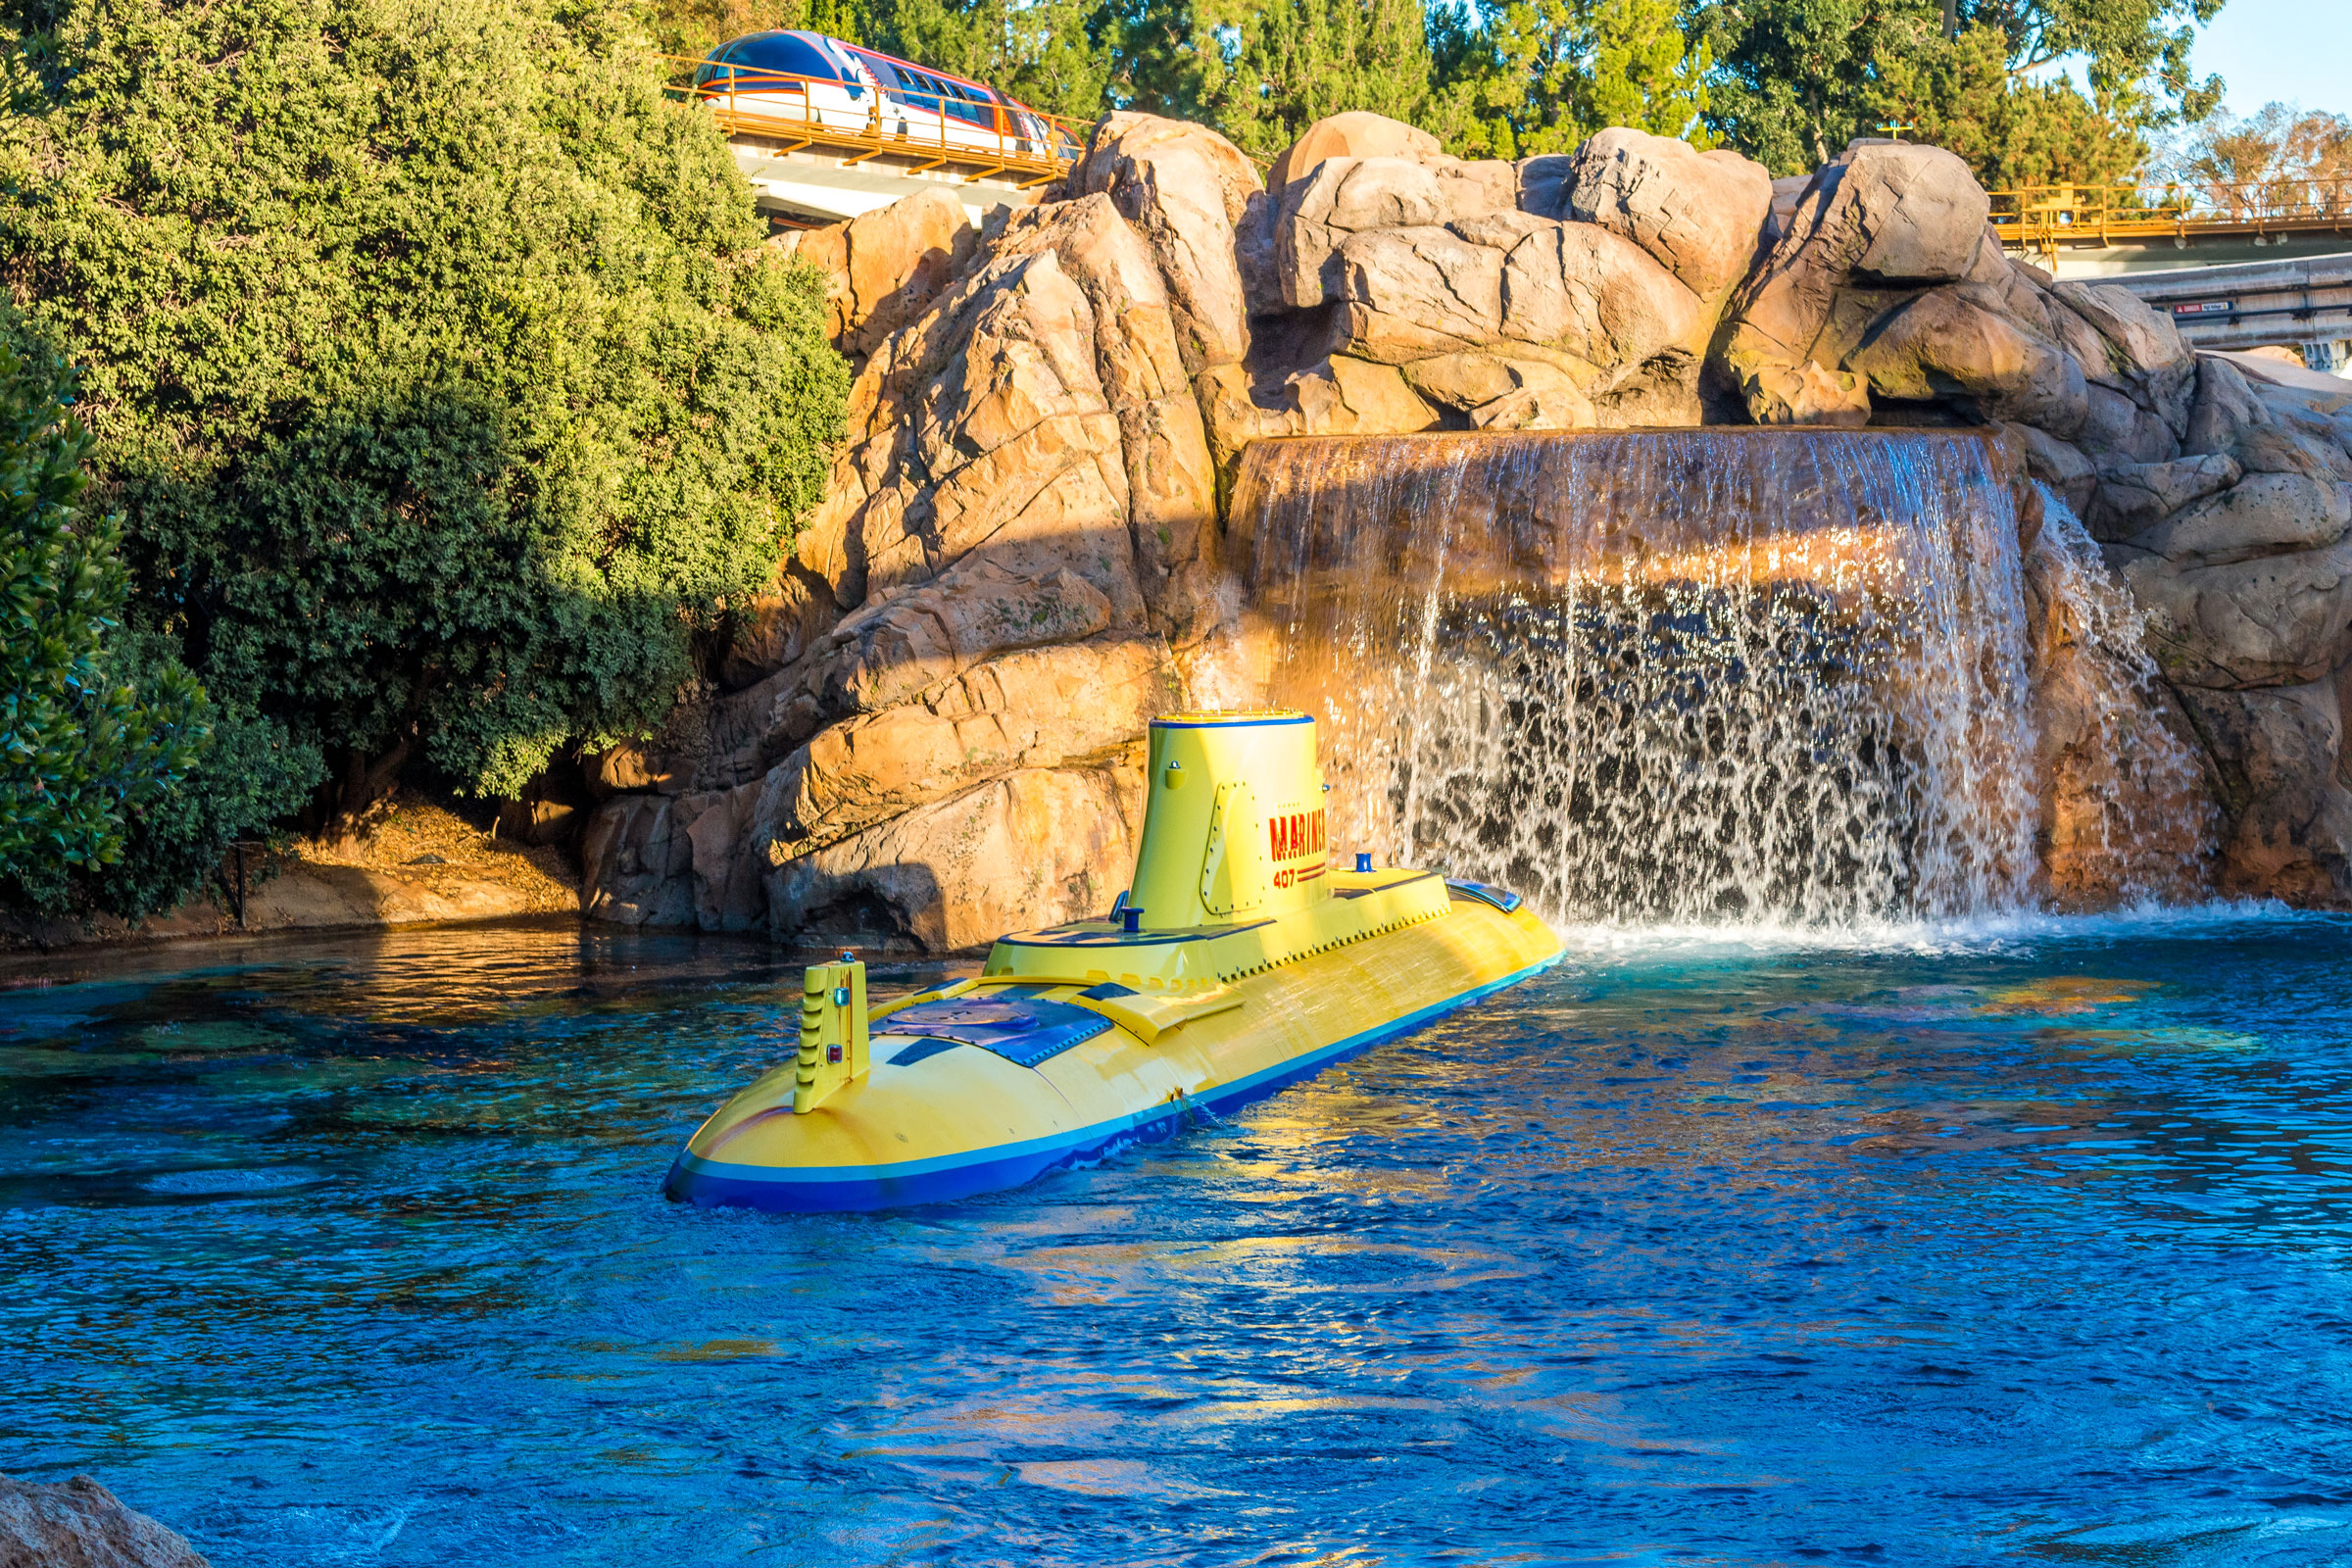 Finding Nemo Submarine Voyage at Disneyland Resort | Attraction Insight